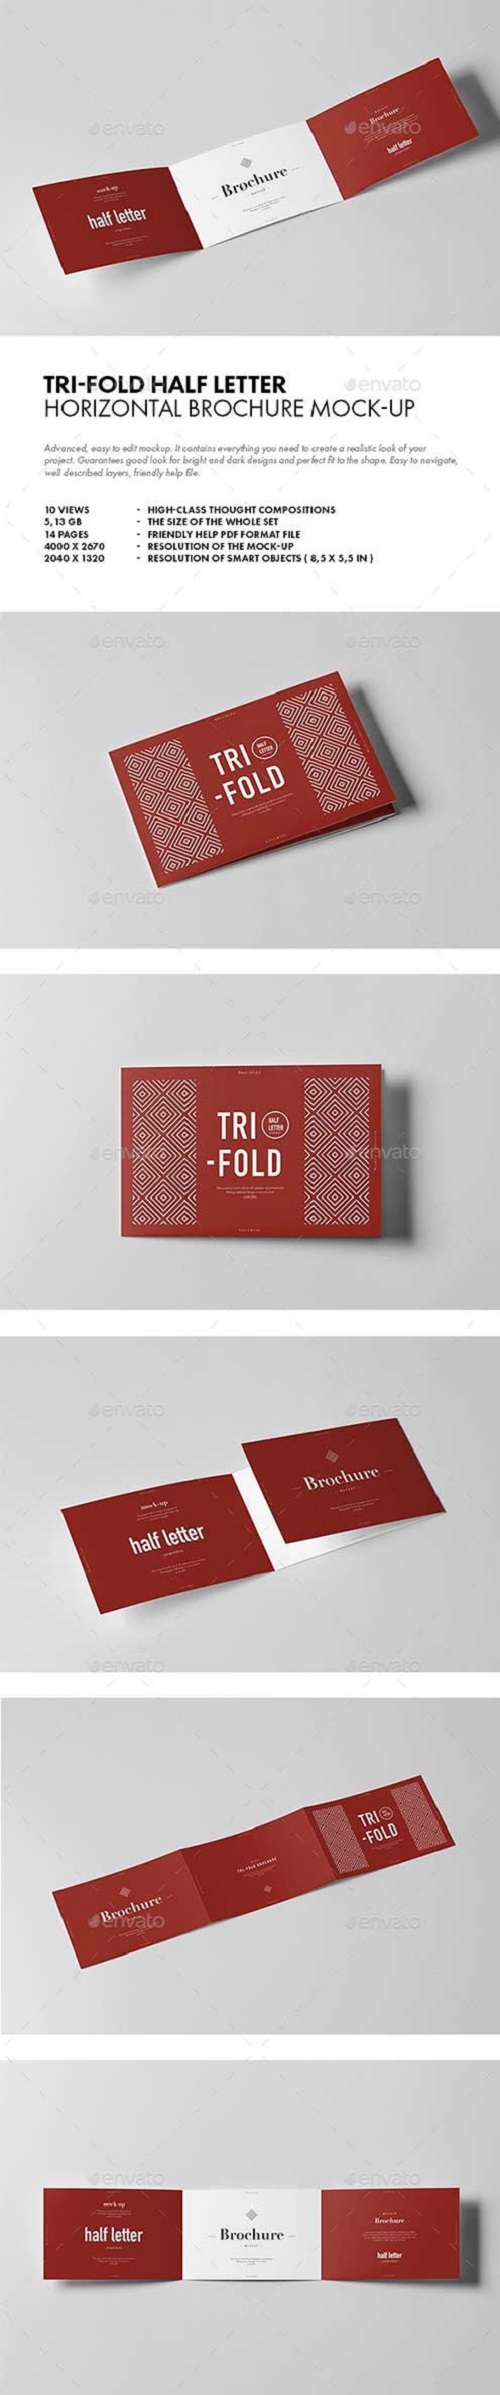 Tri-Fold Half Letter Horizontal Brochure Mock-up 20206271